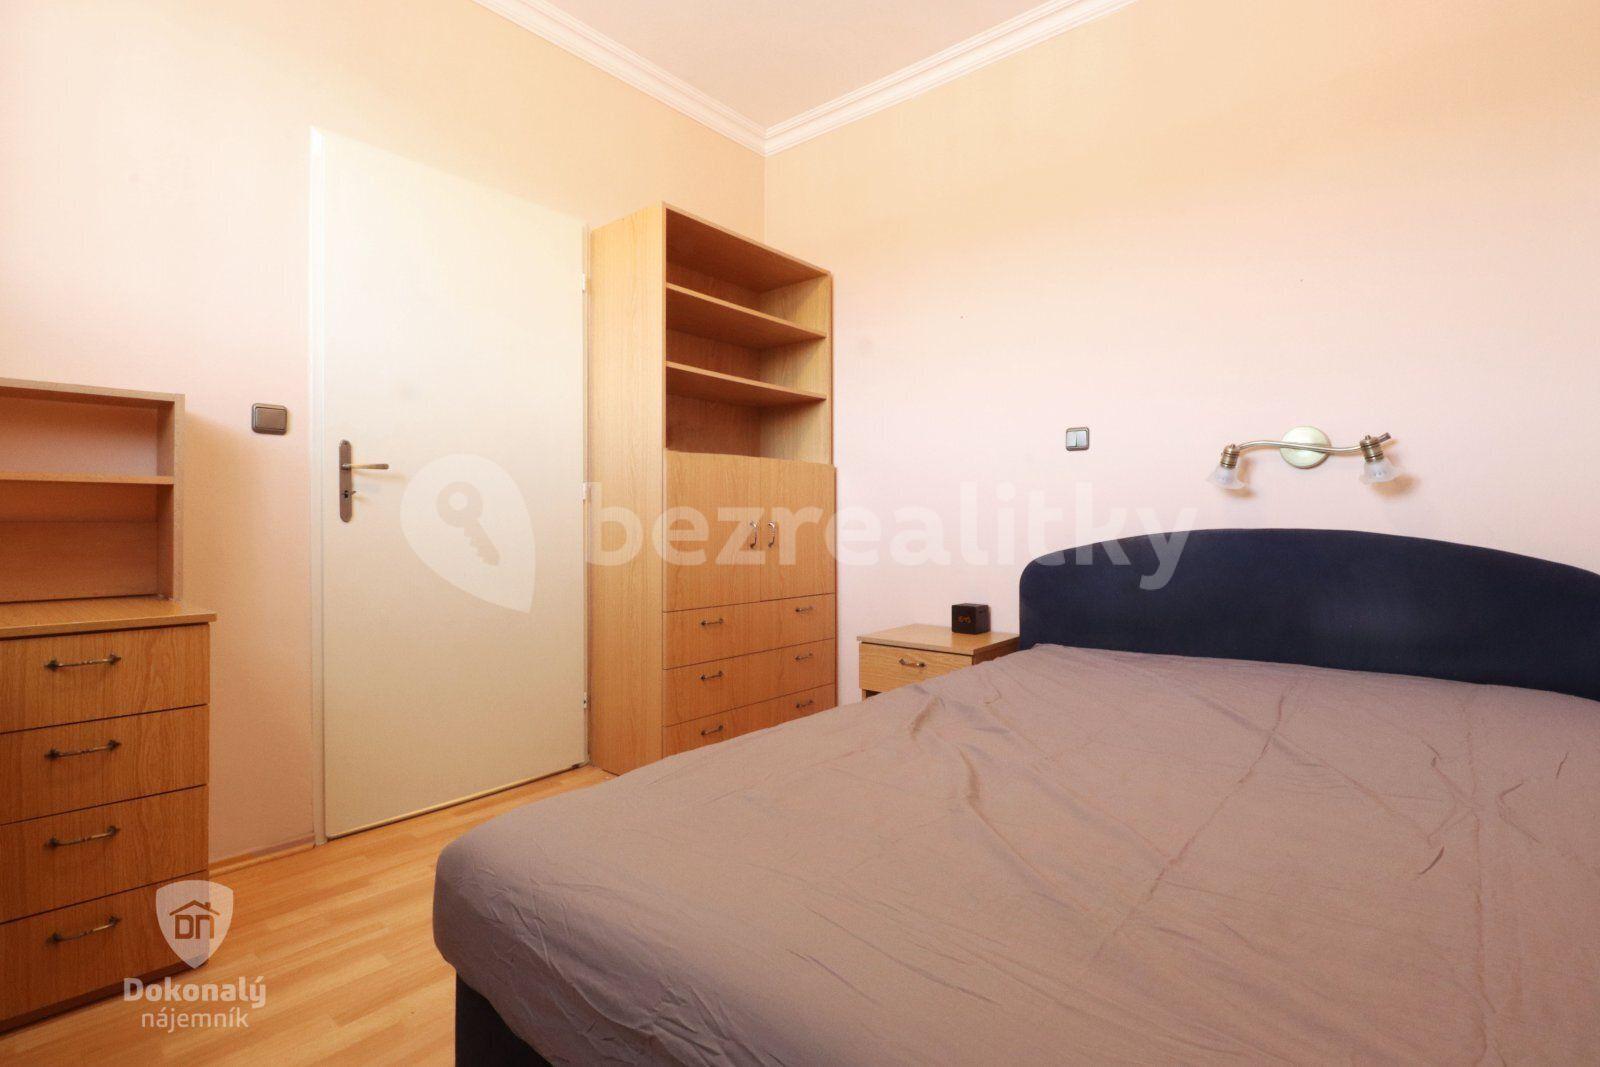 1 bedroom with open-plan kitchen flat to rent, 42 m², U školičky, Prague, Prague